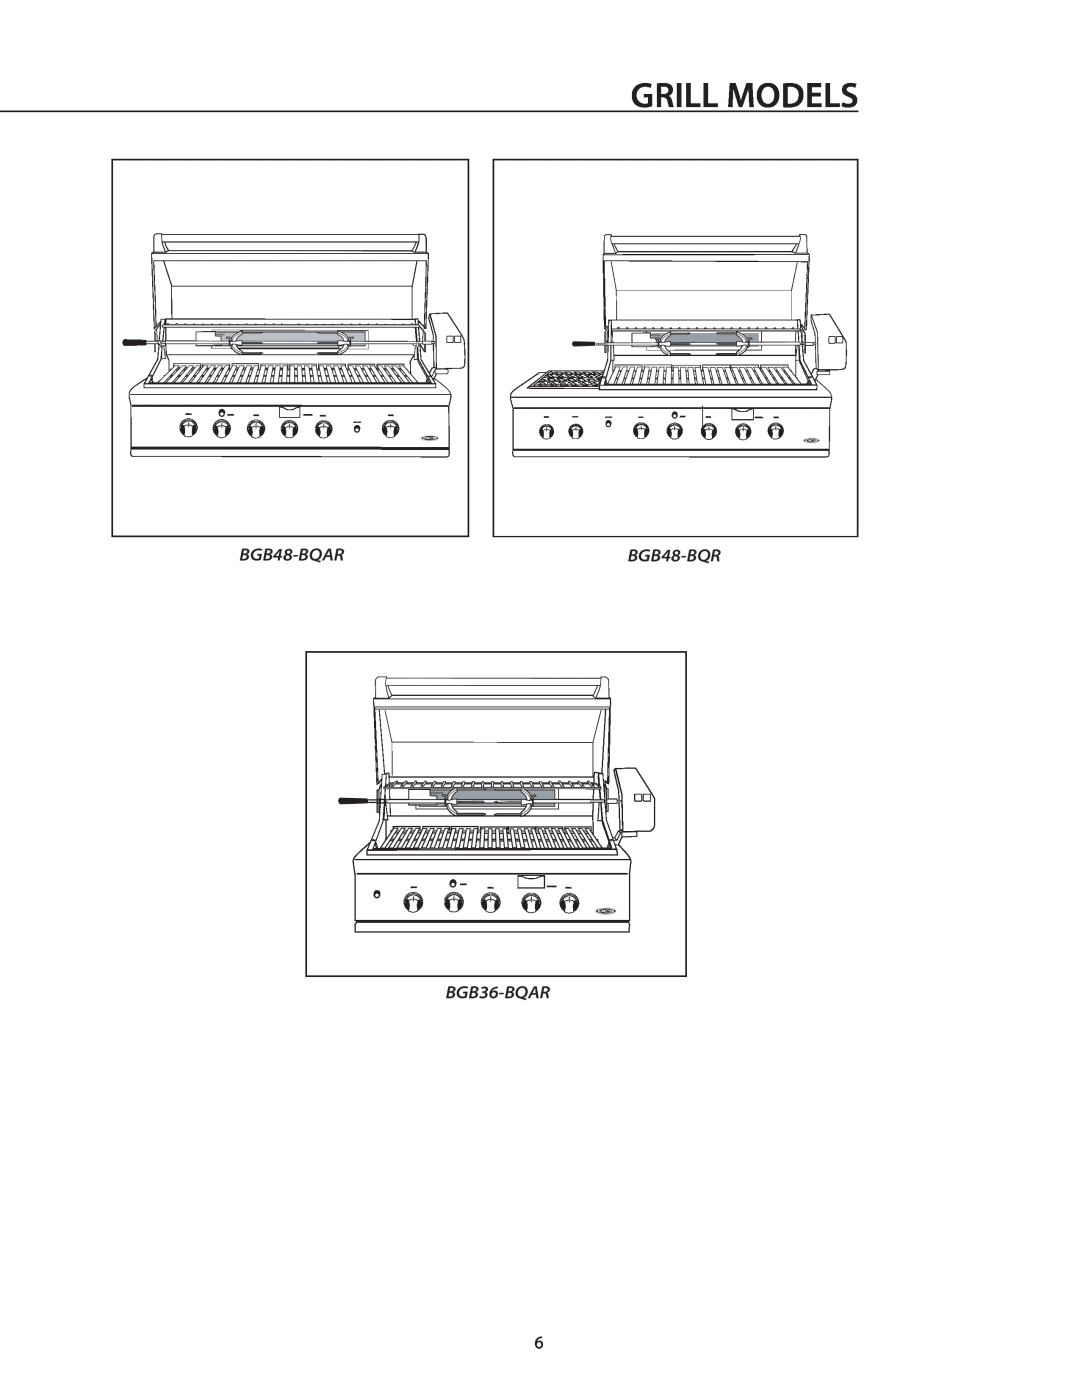 DCS BGB36-BQAR manual Grill Models, BGB48-BQAR, BGB48-BQR 